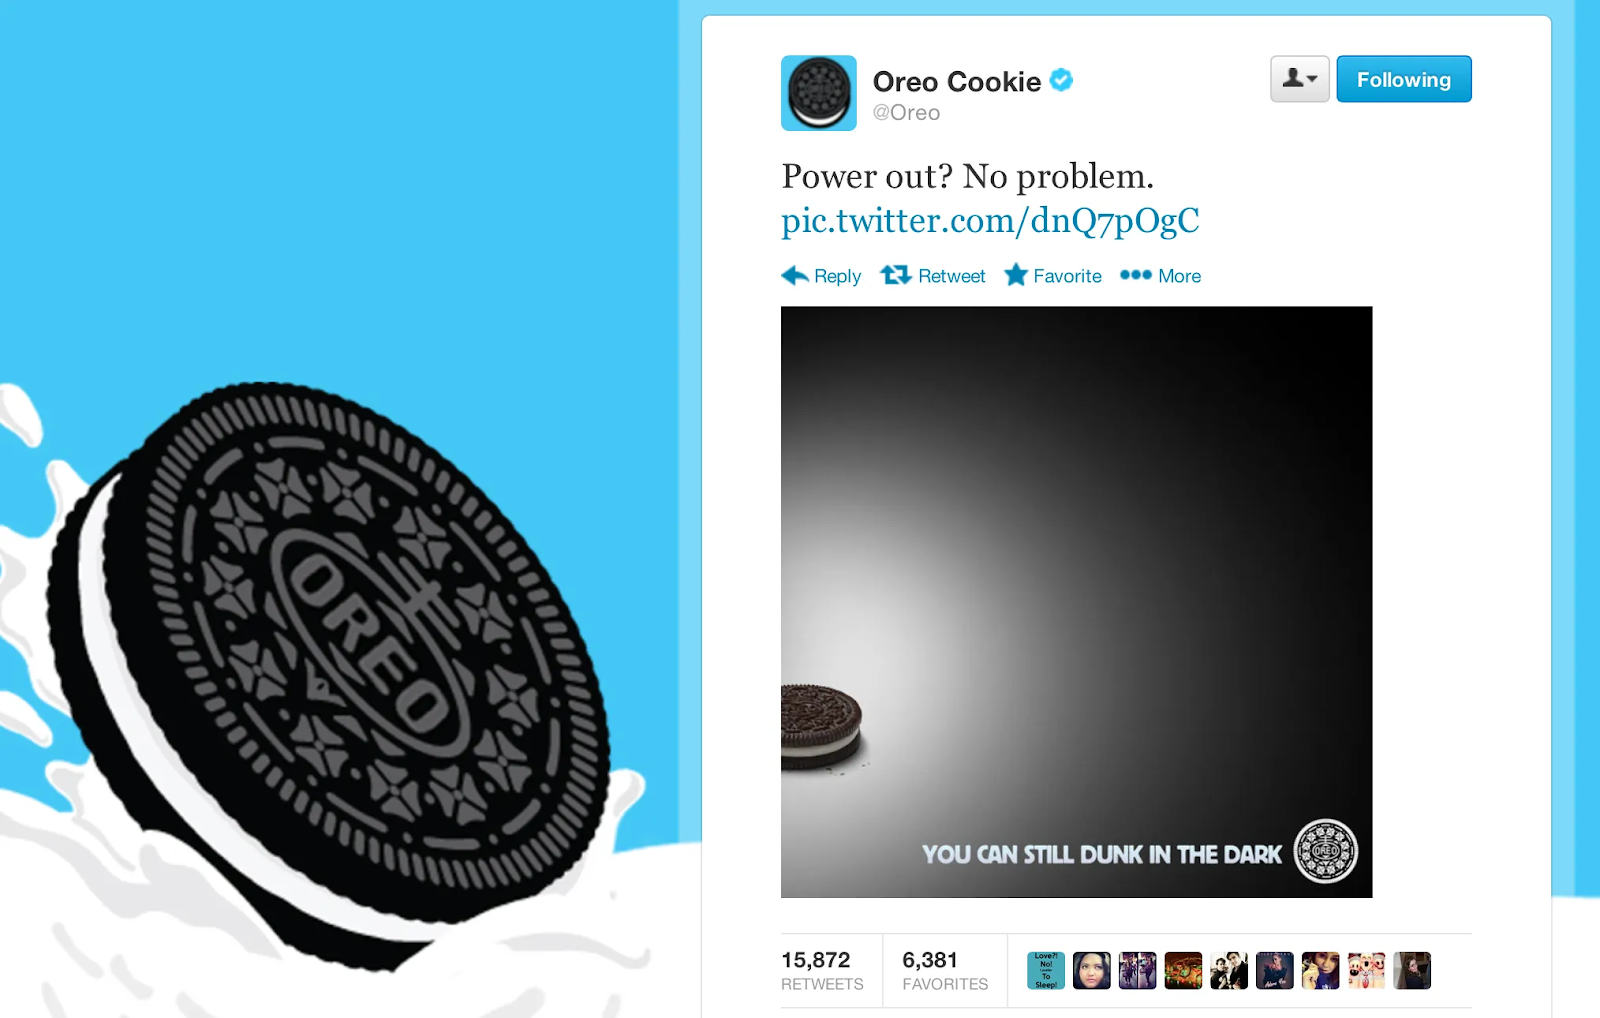 Oreo cookie meme marketing strategy